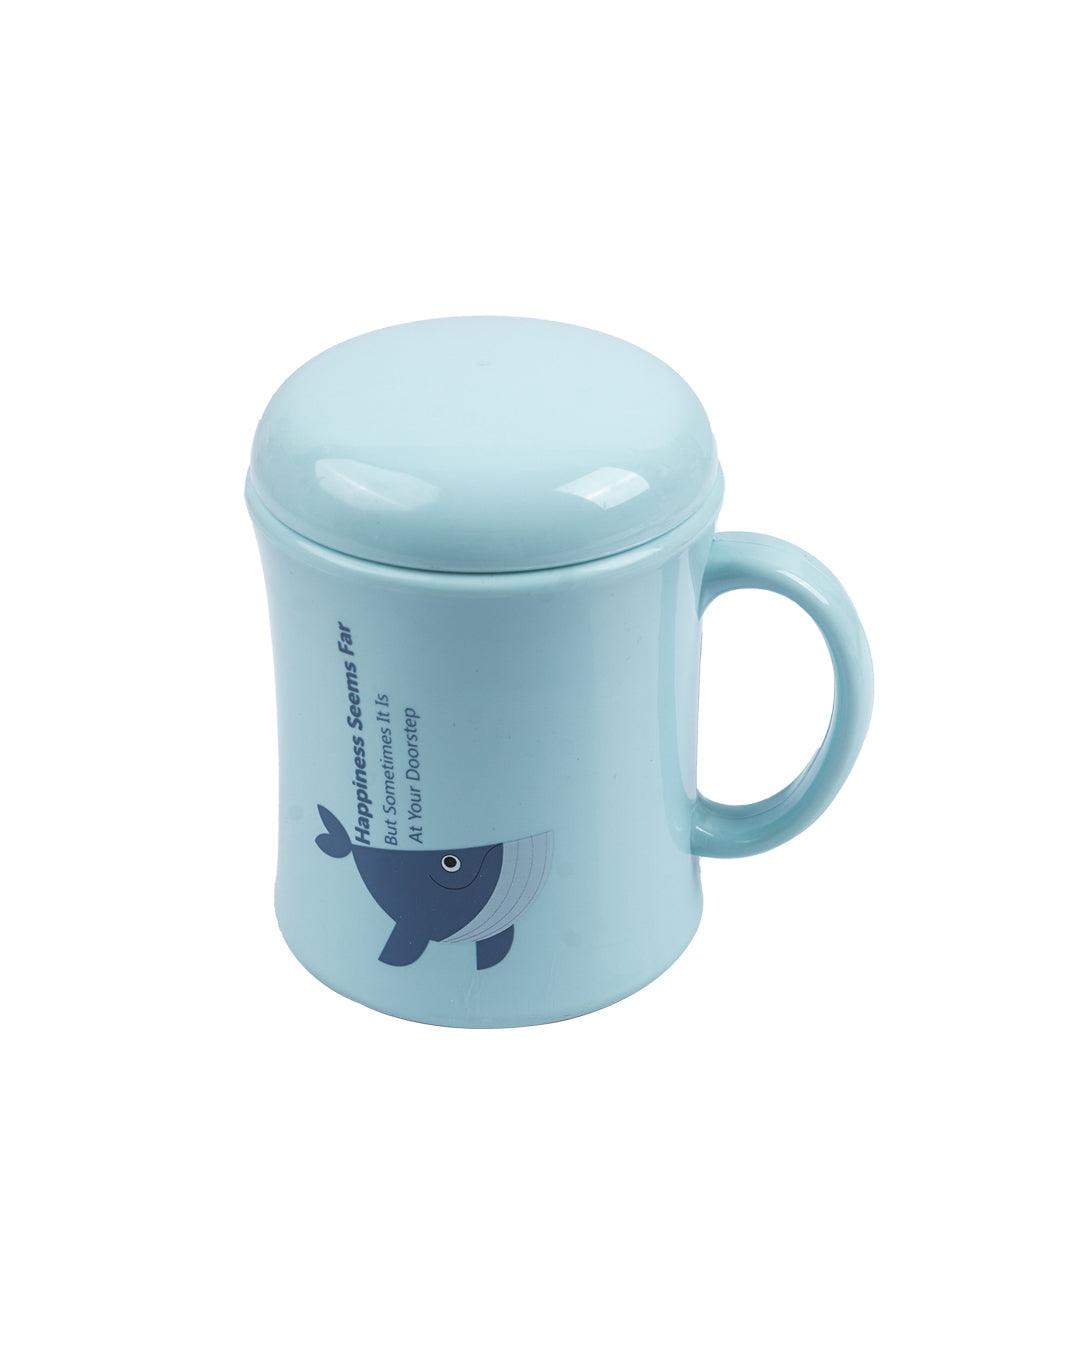 Mug with Lid, Whale Print, Blue, Plastic, 450 mL - MARKET 99